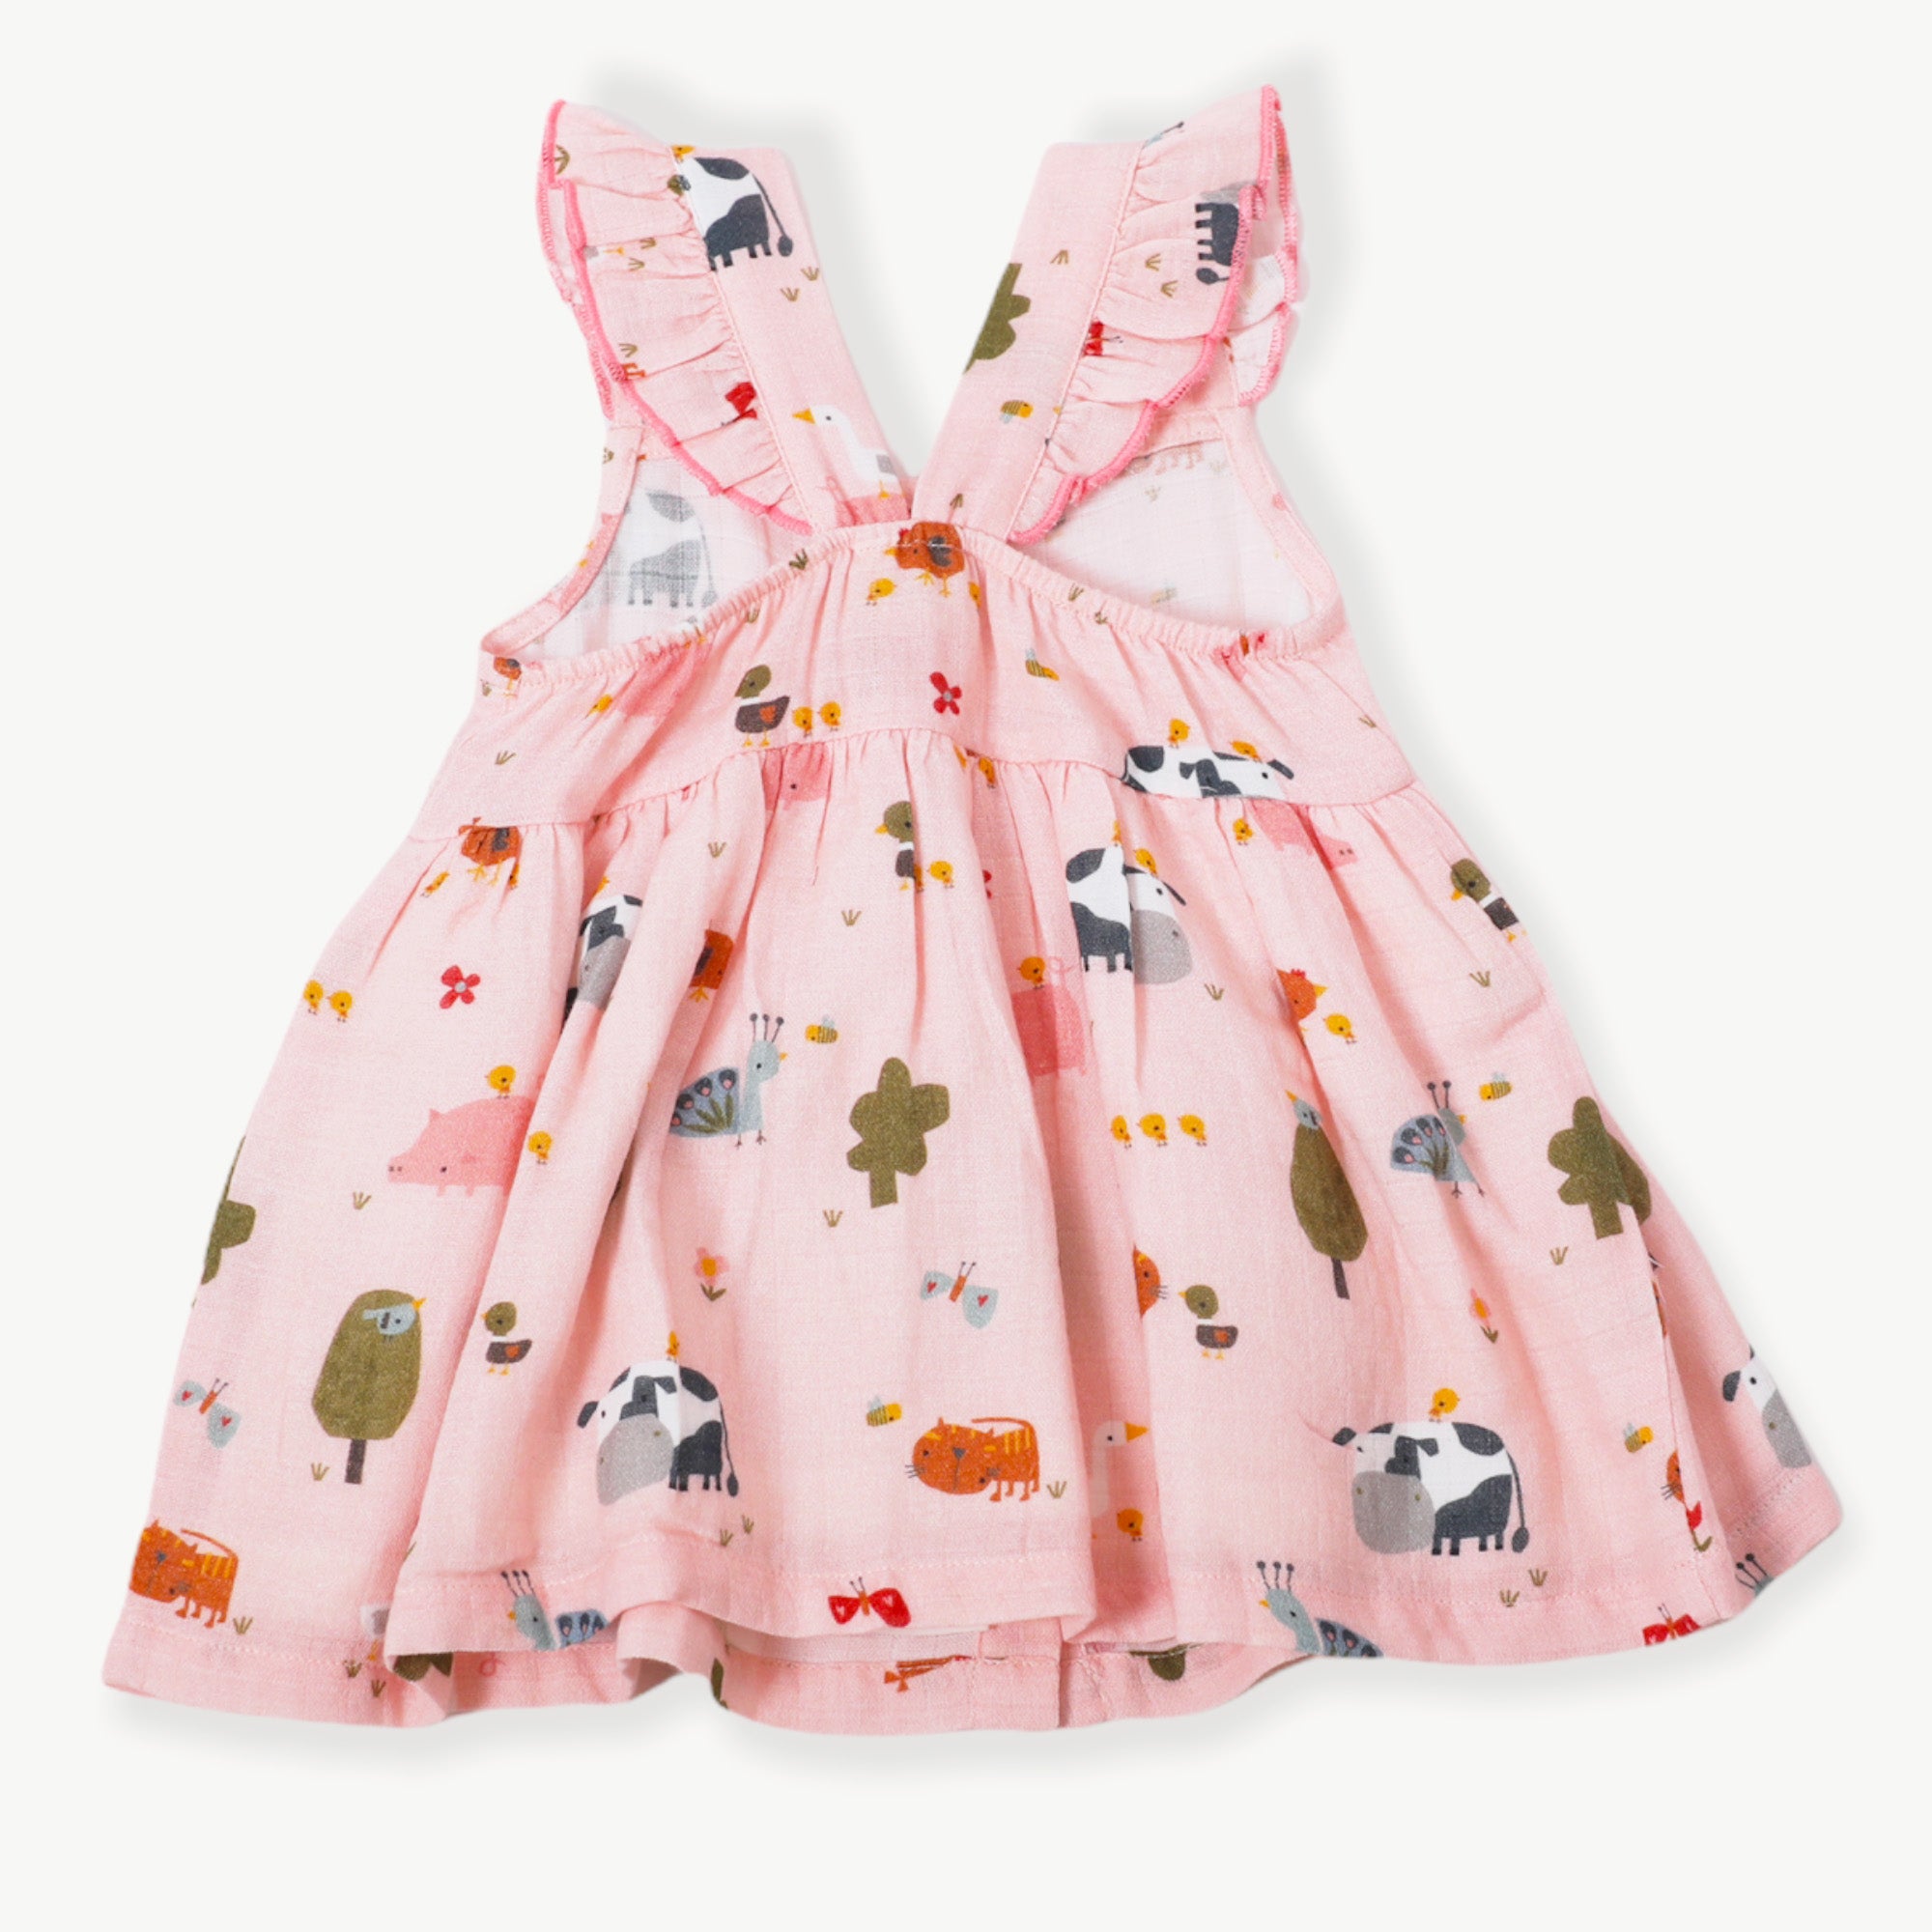 Organic Farm Ruffled Sleeveless Button Front Dress for Baby Girls